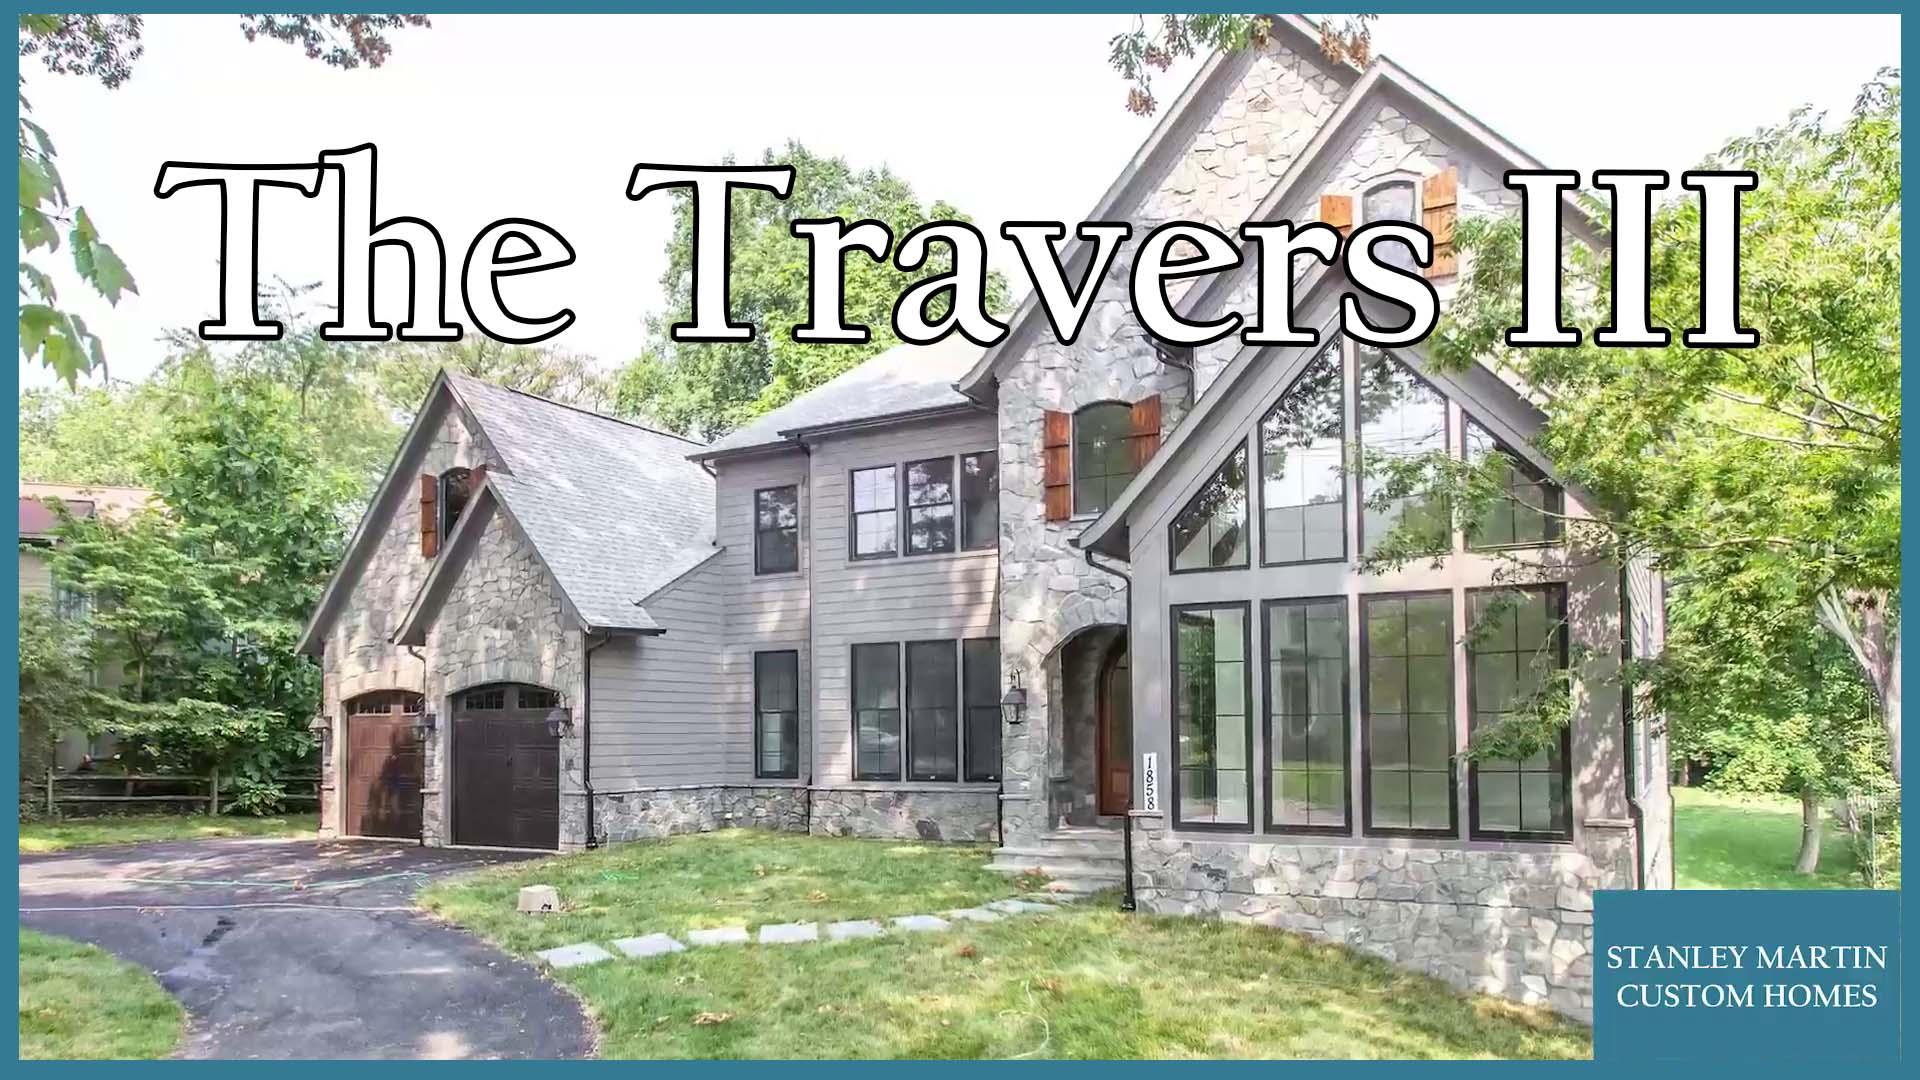 Stanley Martin Custom Homes | The Travers III